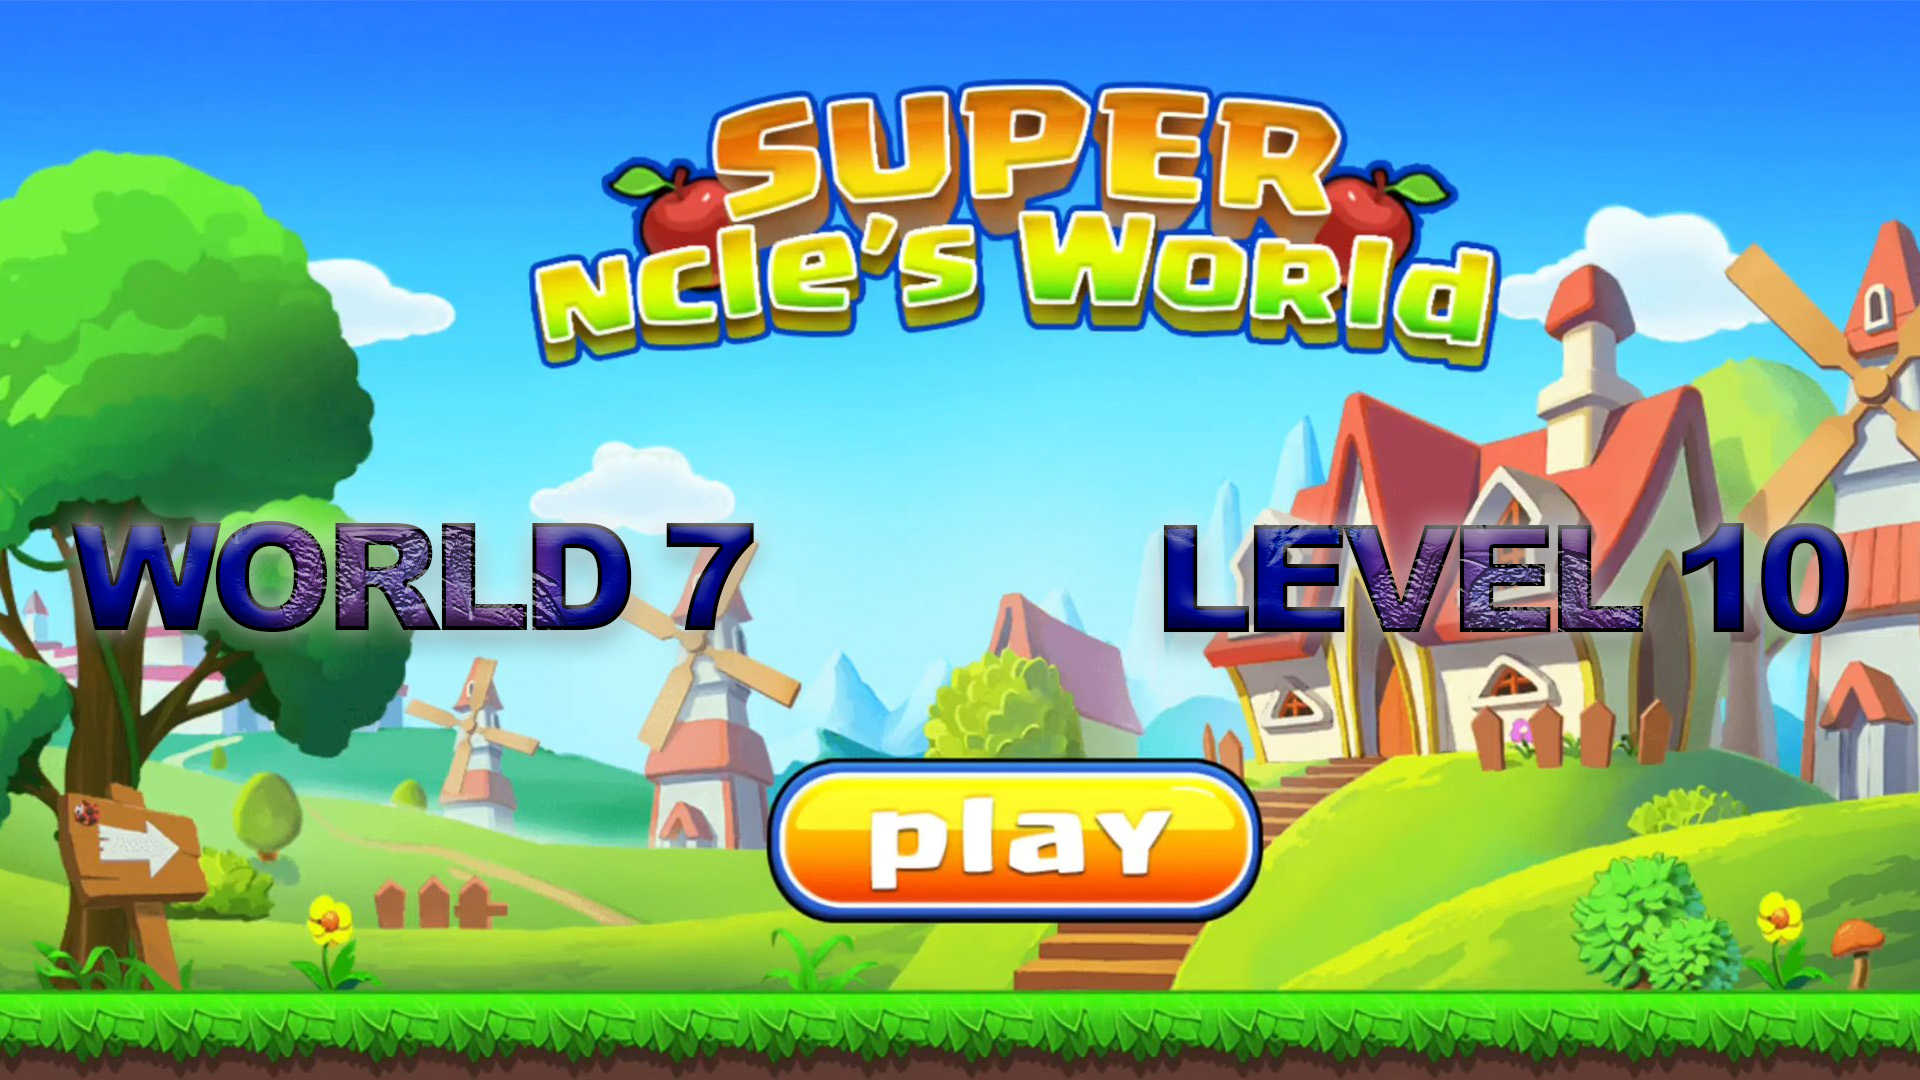 Super ncle's  World 7. Level 10.